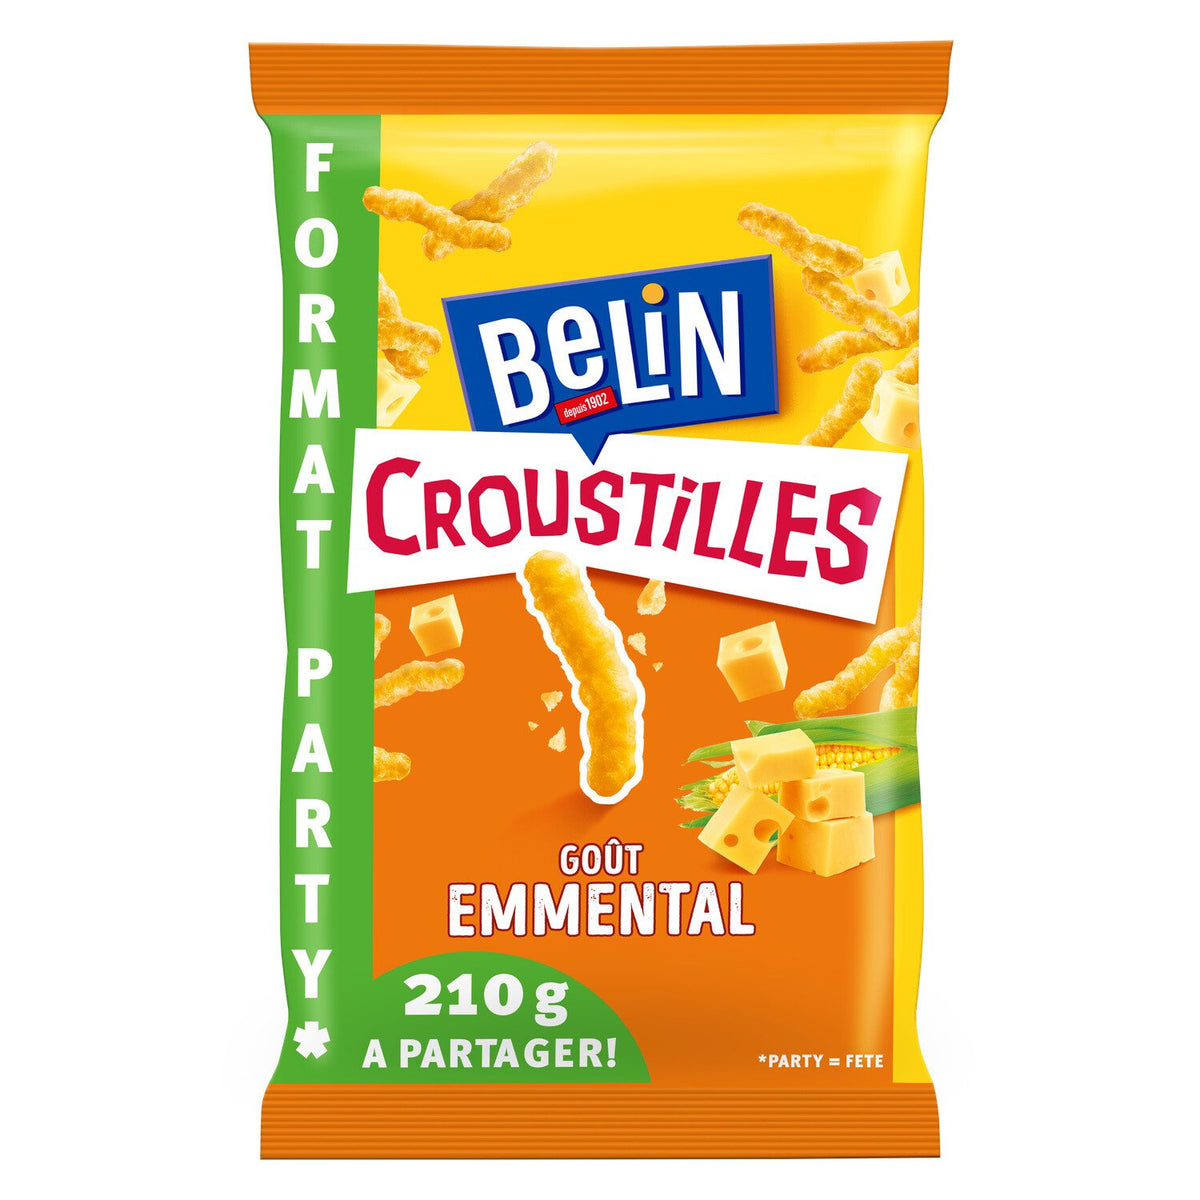 BELIN Biscuits apéritifs goût emmental Croustilles format famillial 210g -CH